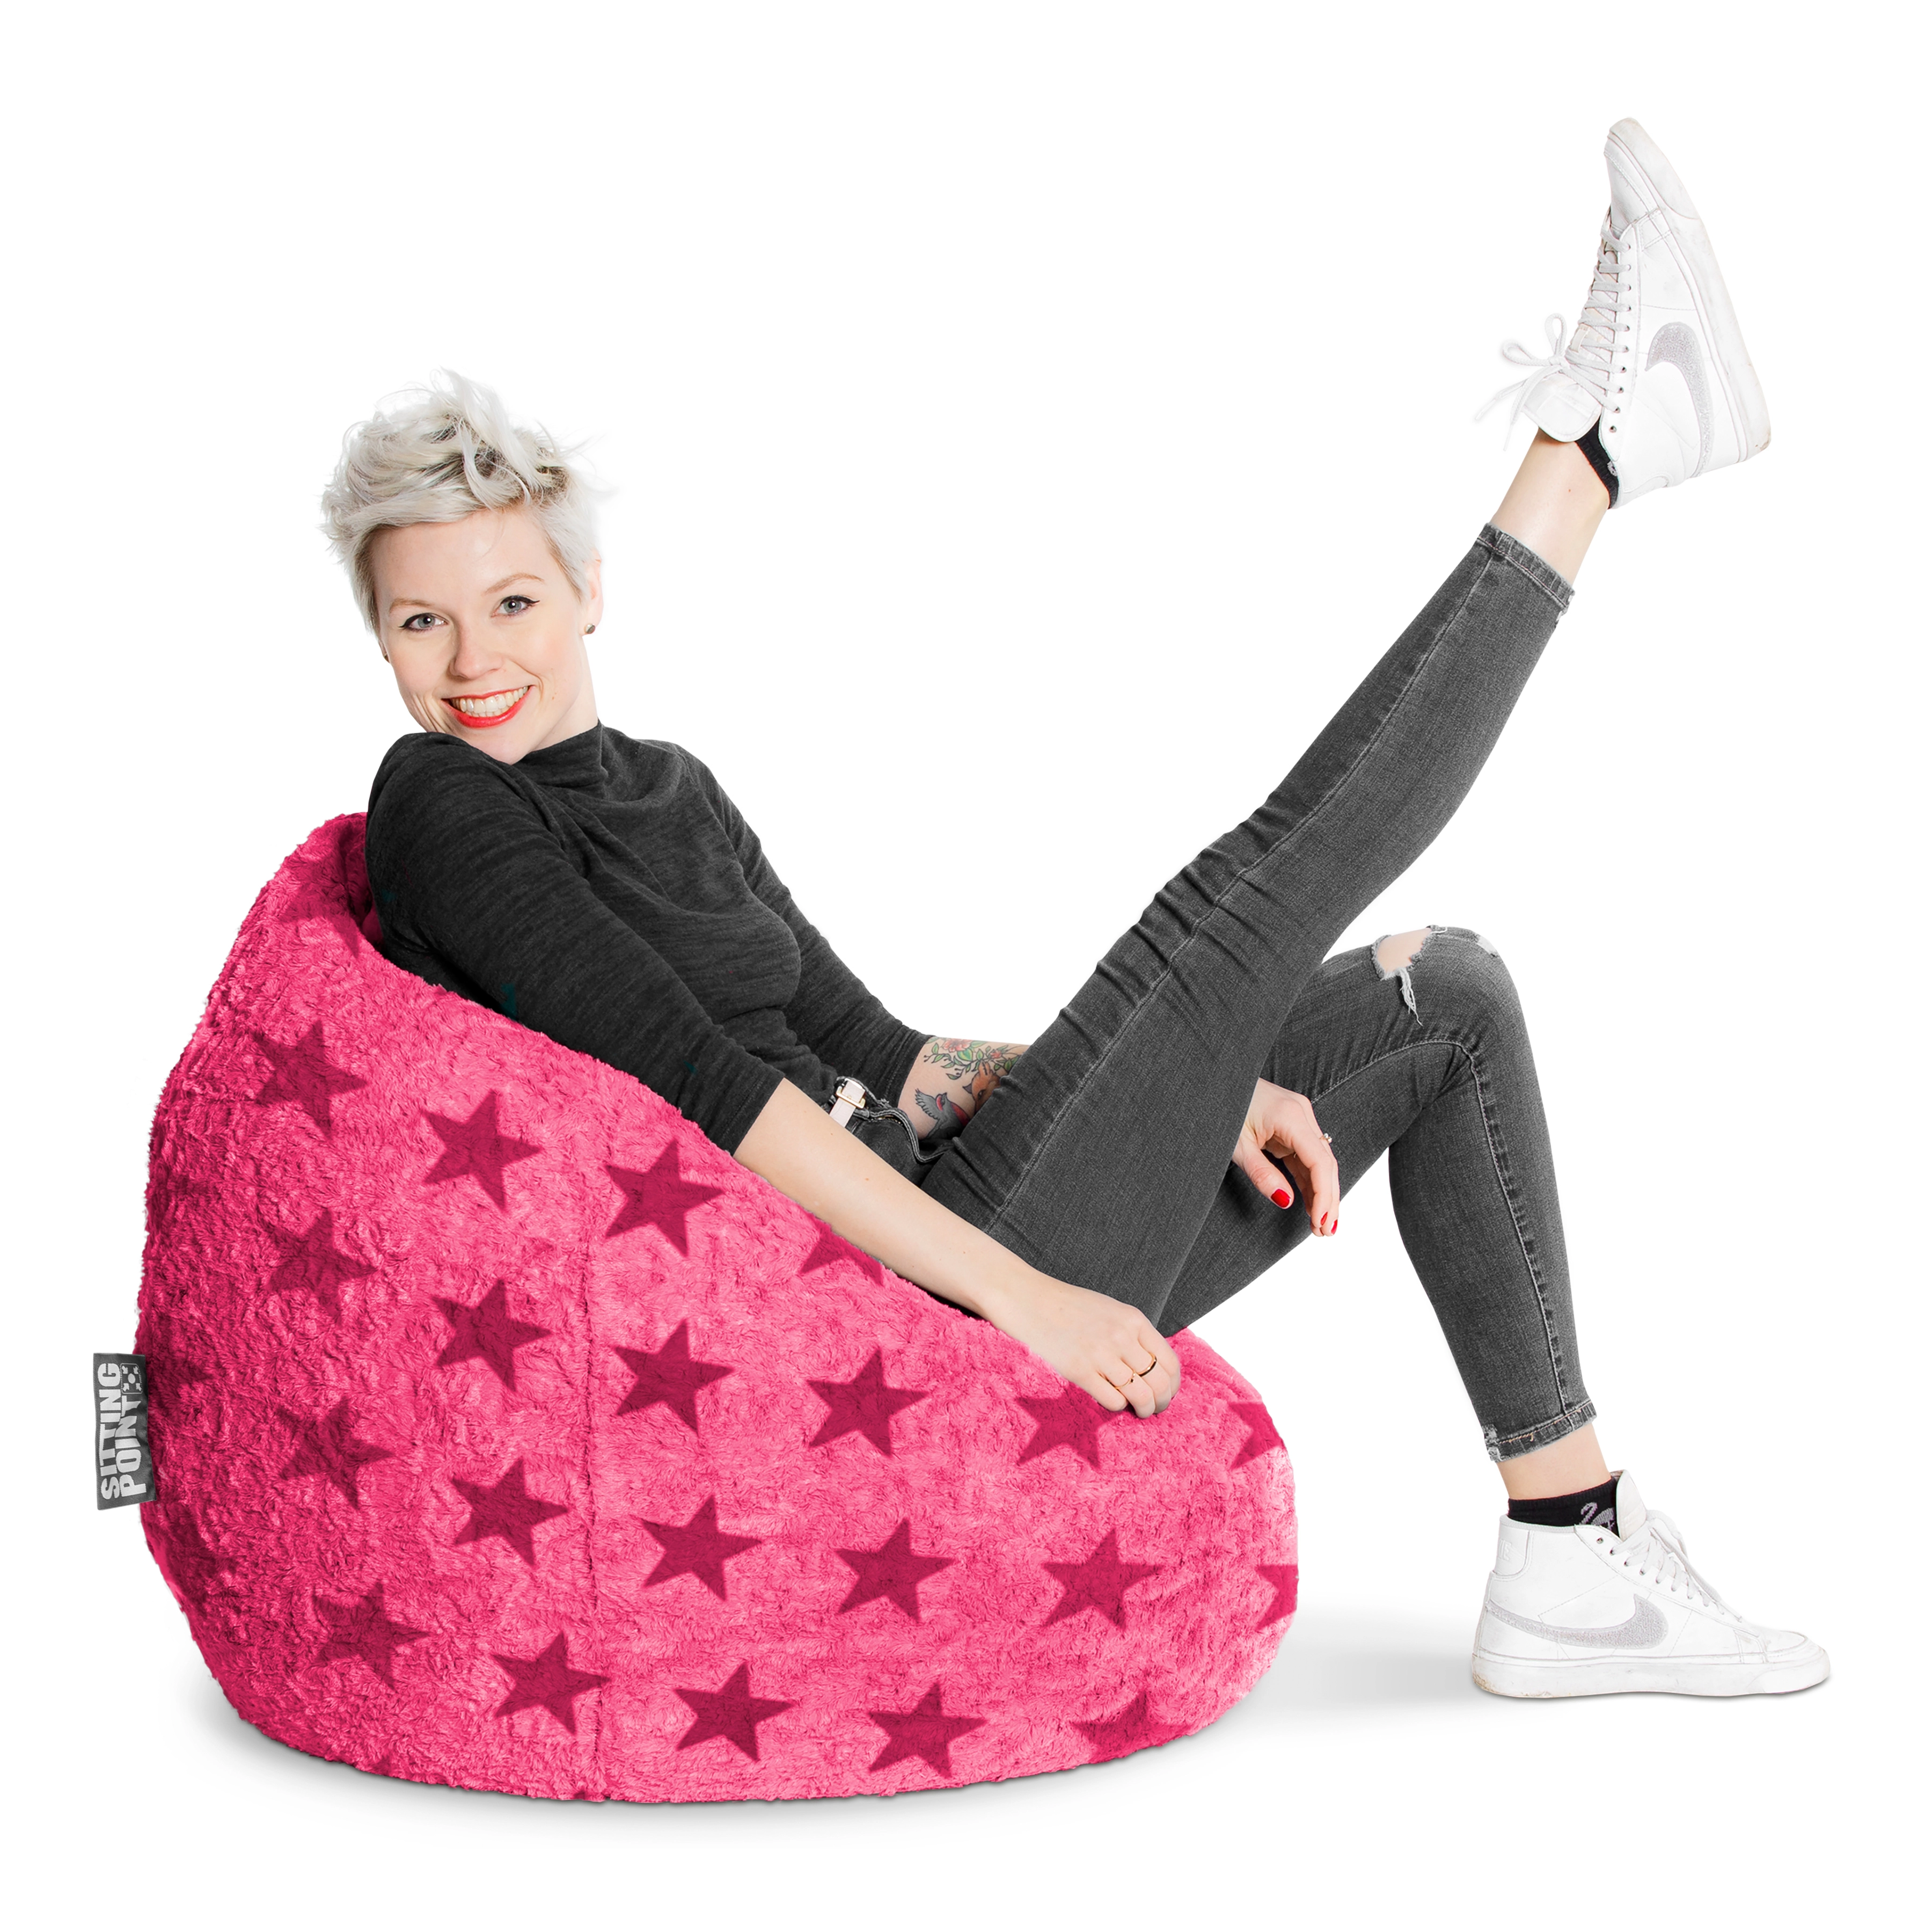 l bei 220 BeanBag OBI Sitzsack Sitting Fluffy Stars kaufen Point Pink